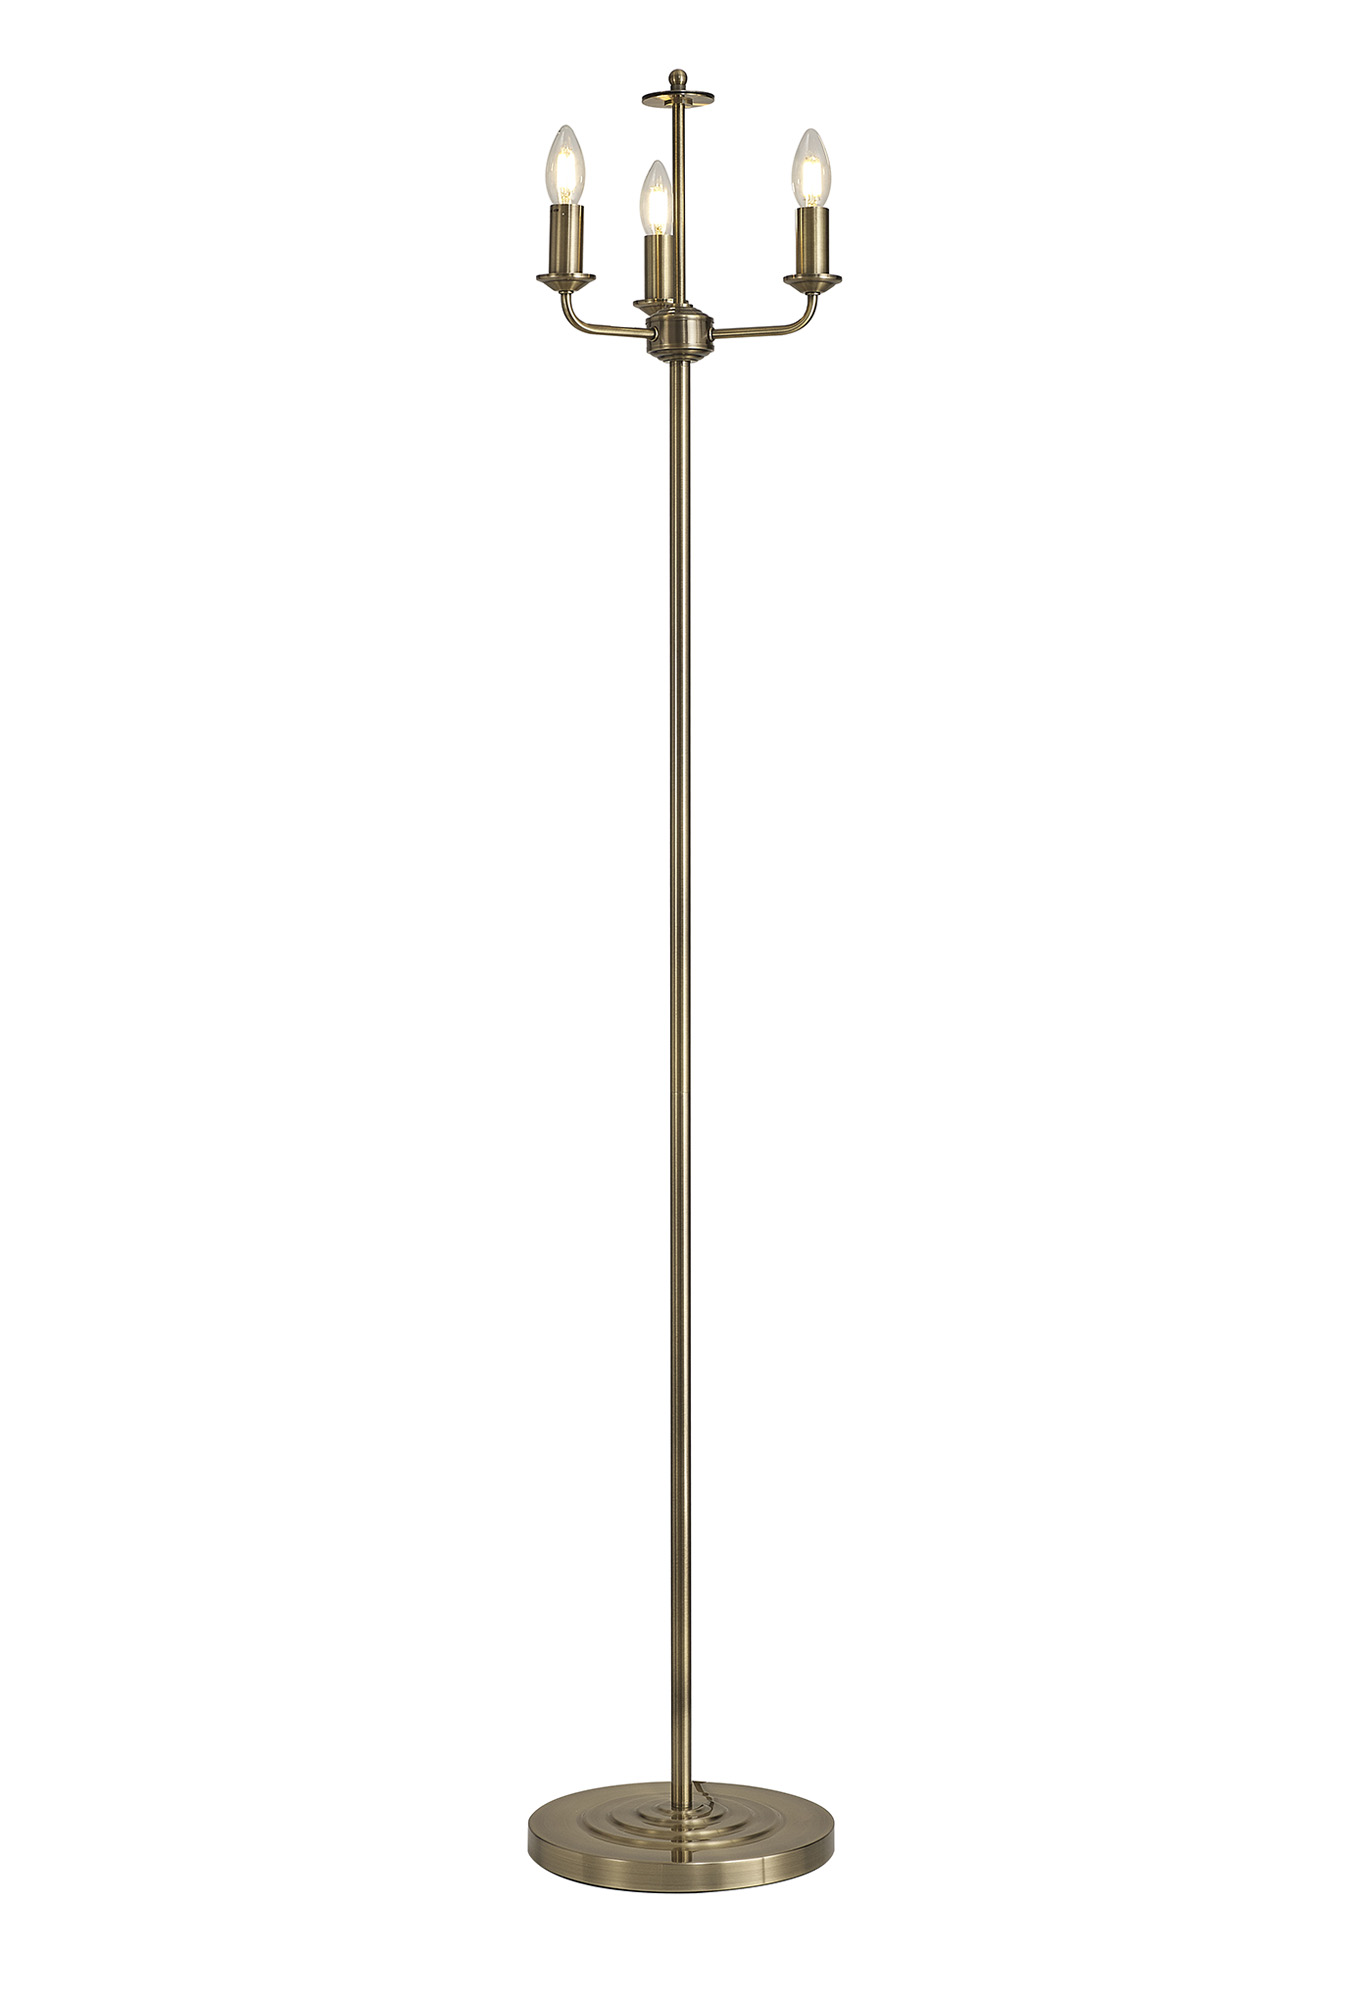 D0686  Banyan Switched Floor Lamp 3 Light Antique Brass